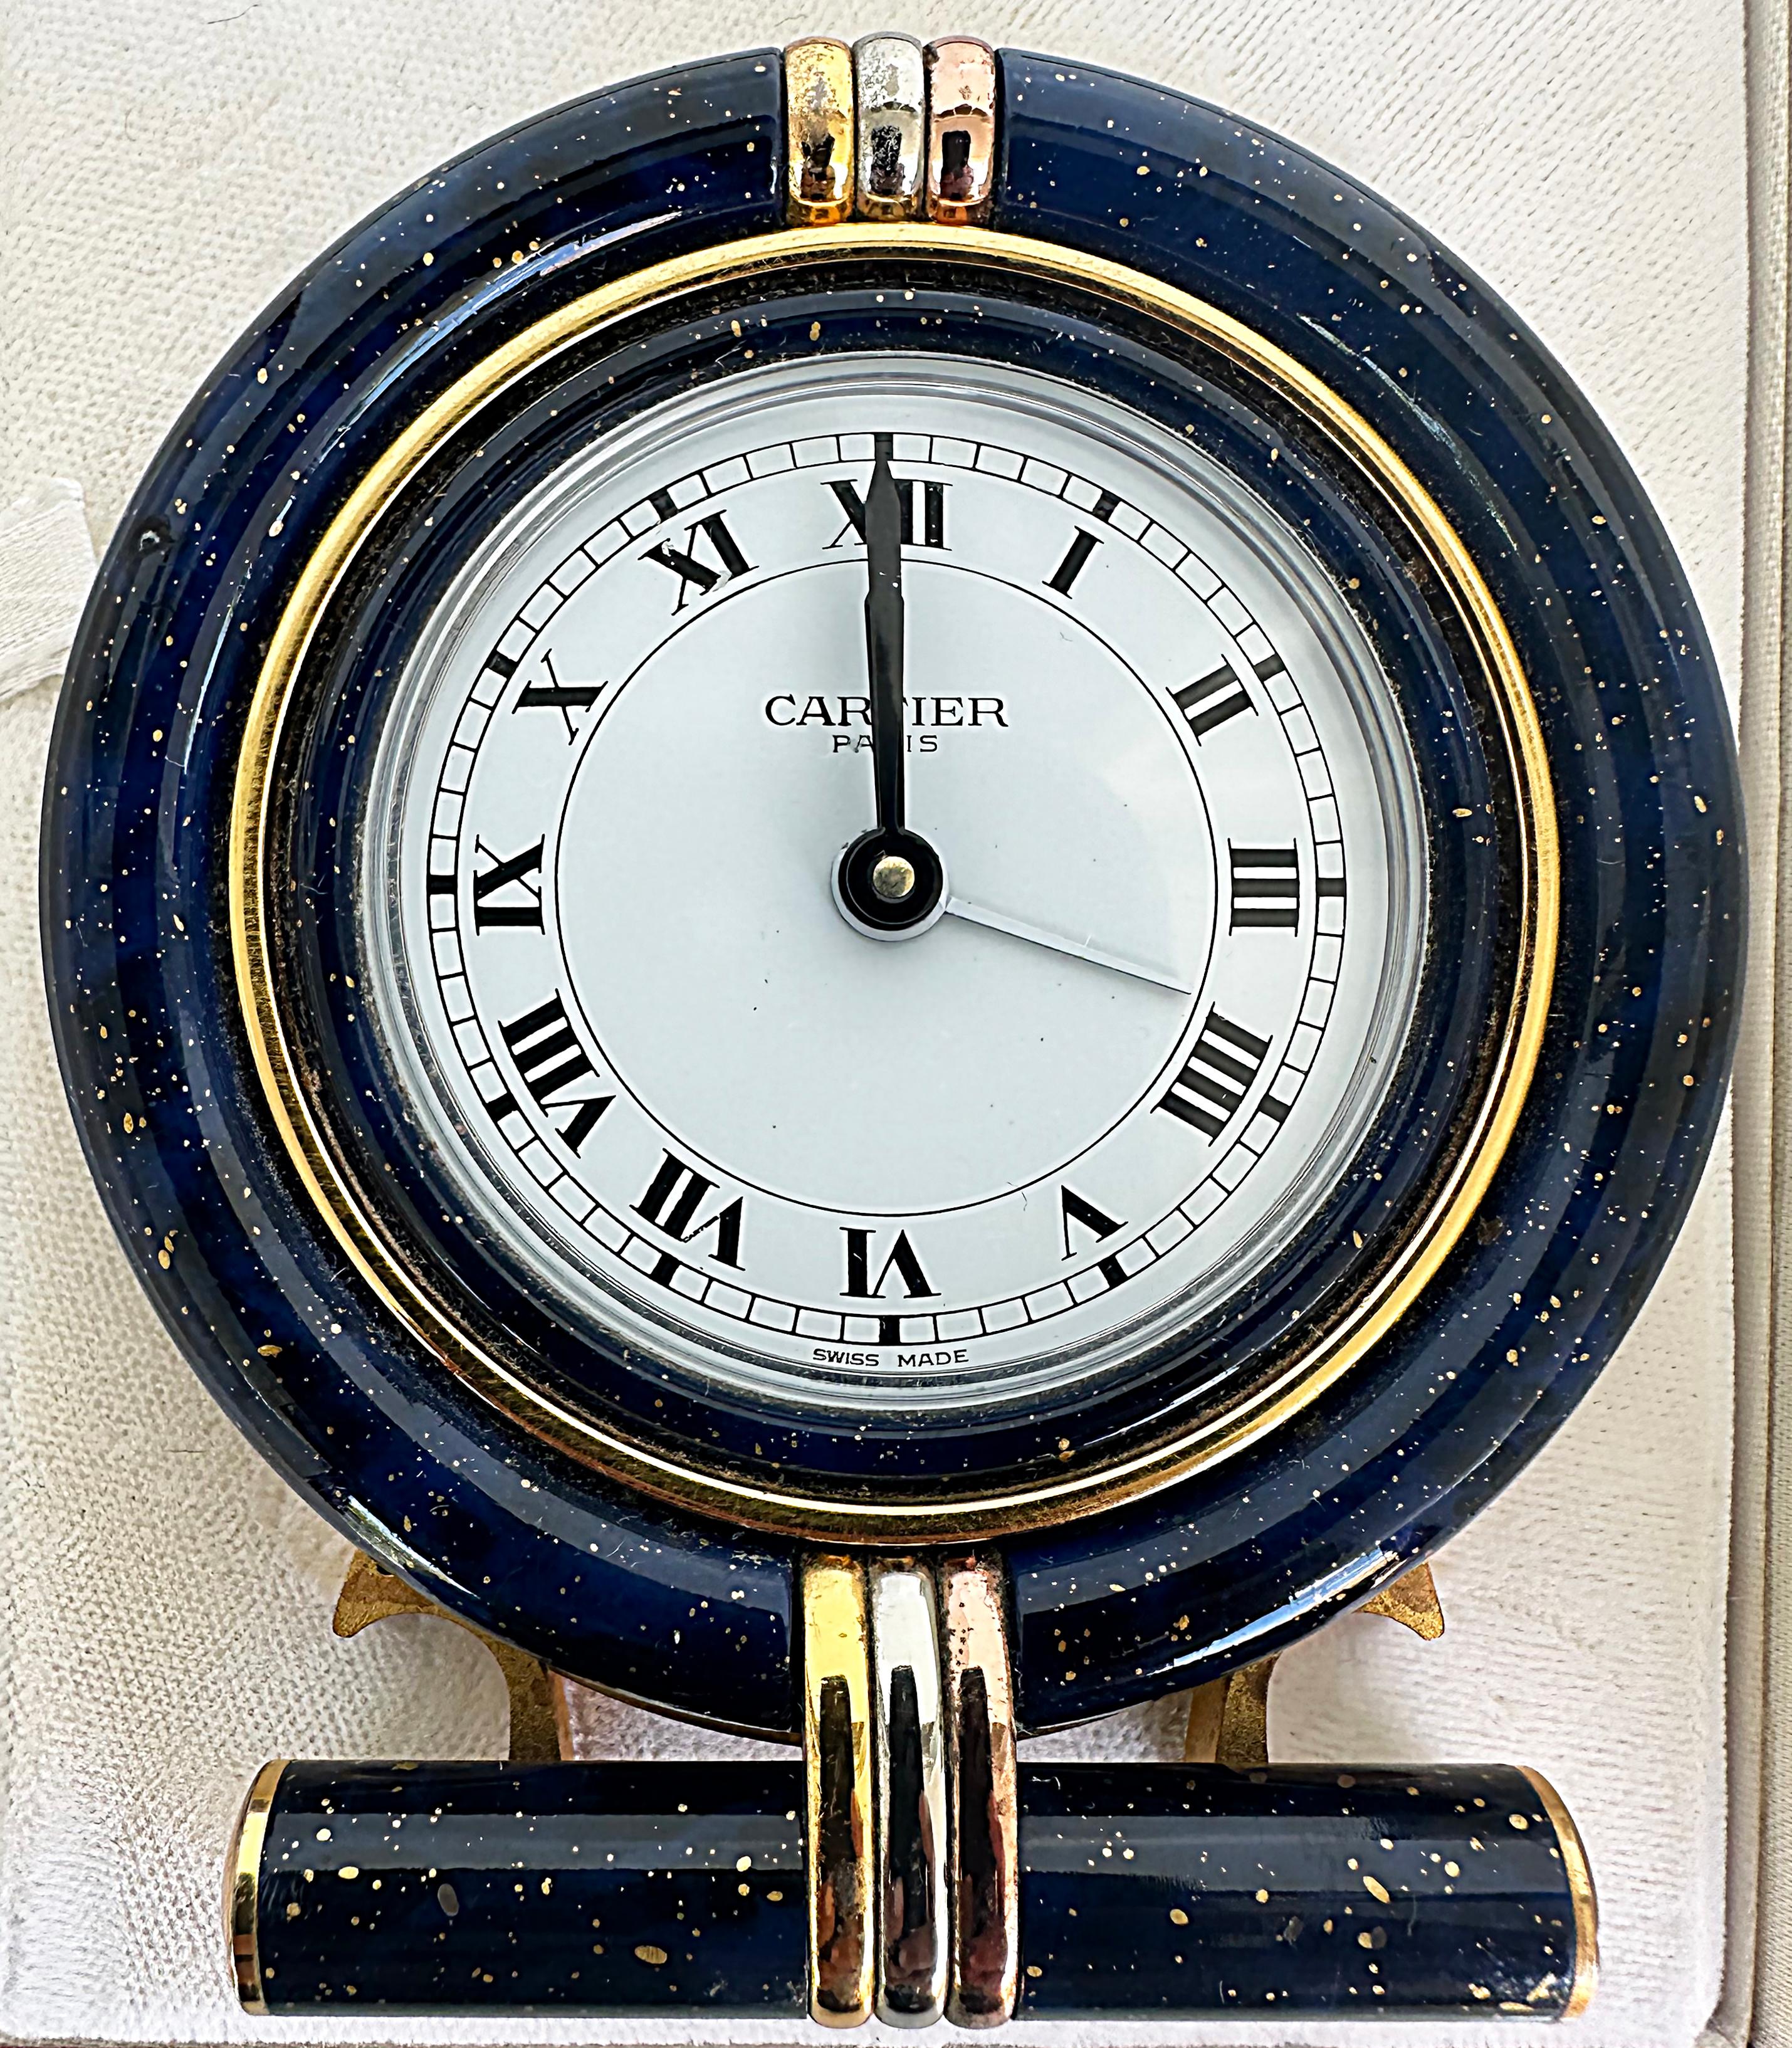 Les Must de Cartier Paris Enamel Gold Plated Travel Clock with Original Case


Offered for sale is a Les Must de Cartier Paris enamel gold plated travel clock with the original Cartier case or box. The clock is enameled with a lapis-look finish